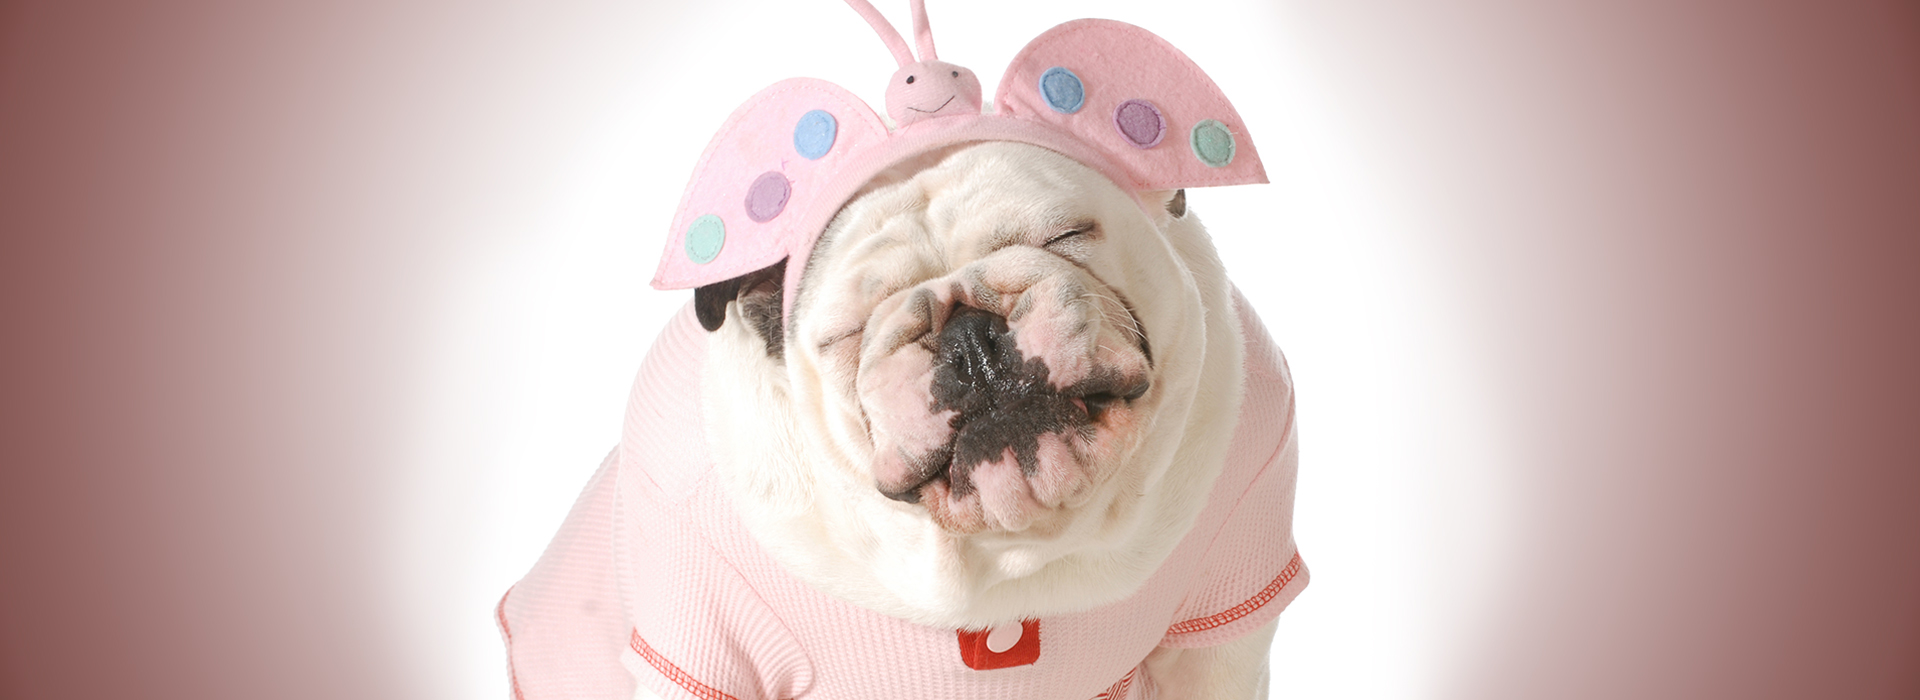 cute puppy - english bulldog female wearing cute costume isolated on white background